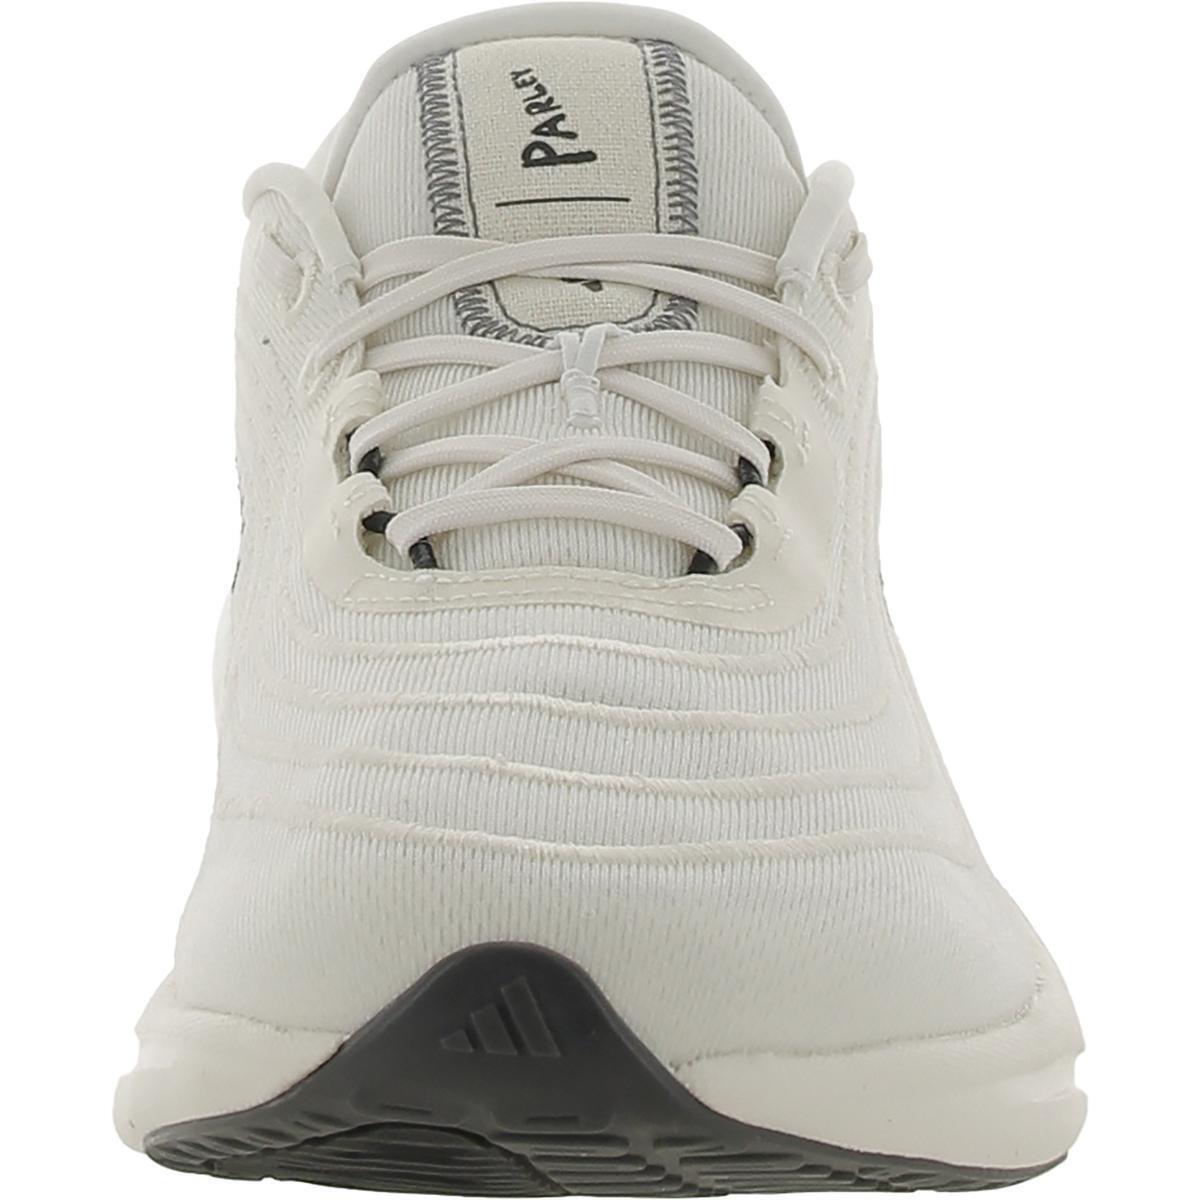 Adidas Mens Supernova 2 Fitness Running Training Shoes Sneakers Bhfo 3122 - Non Dye/White/Black